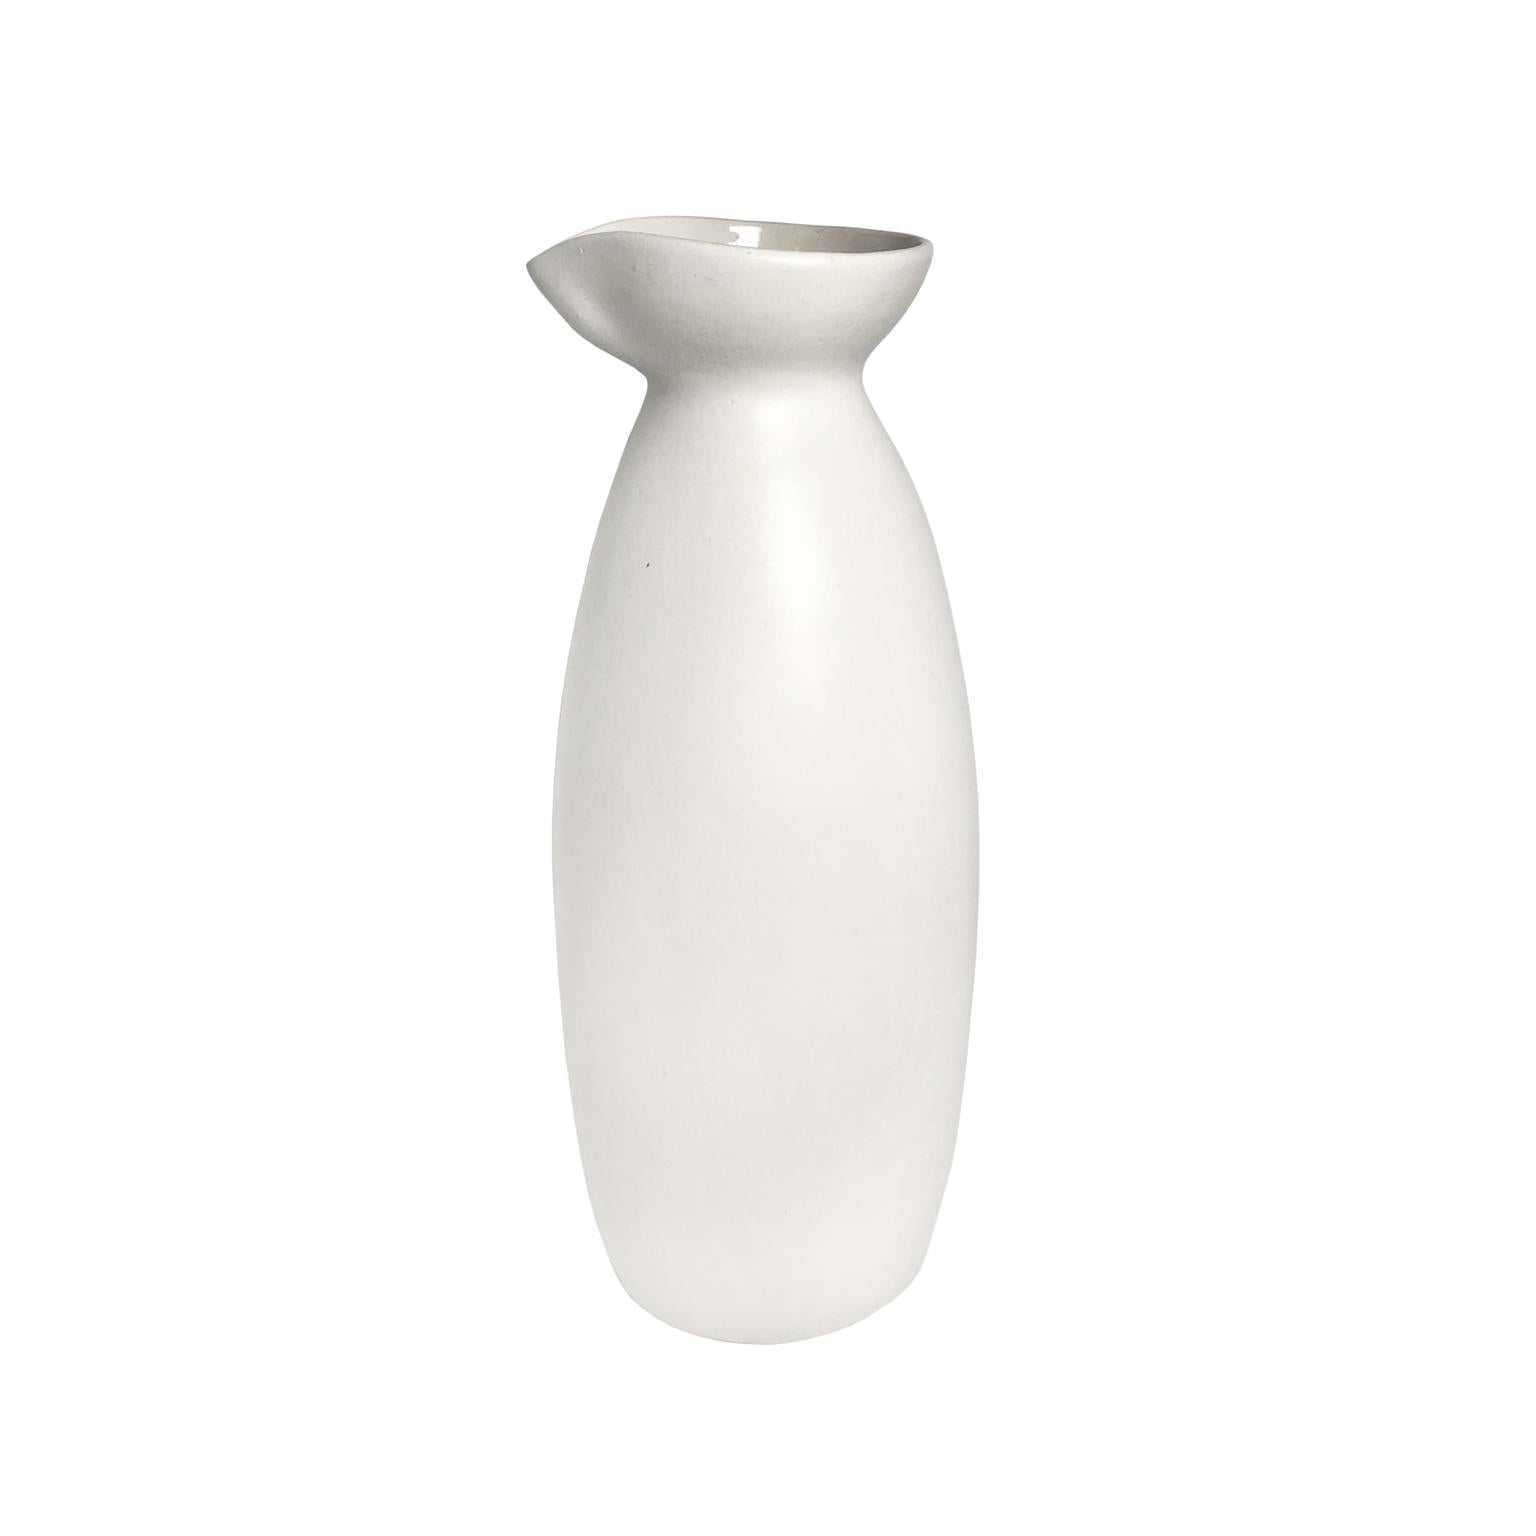 Alabaster Glaze Ceramic Vase #4 with Spout by Sandi Fellman